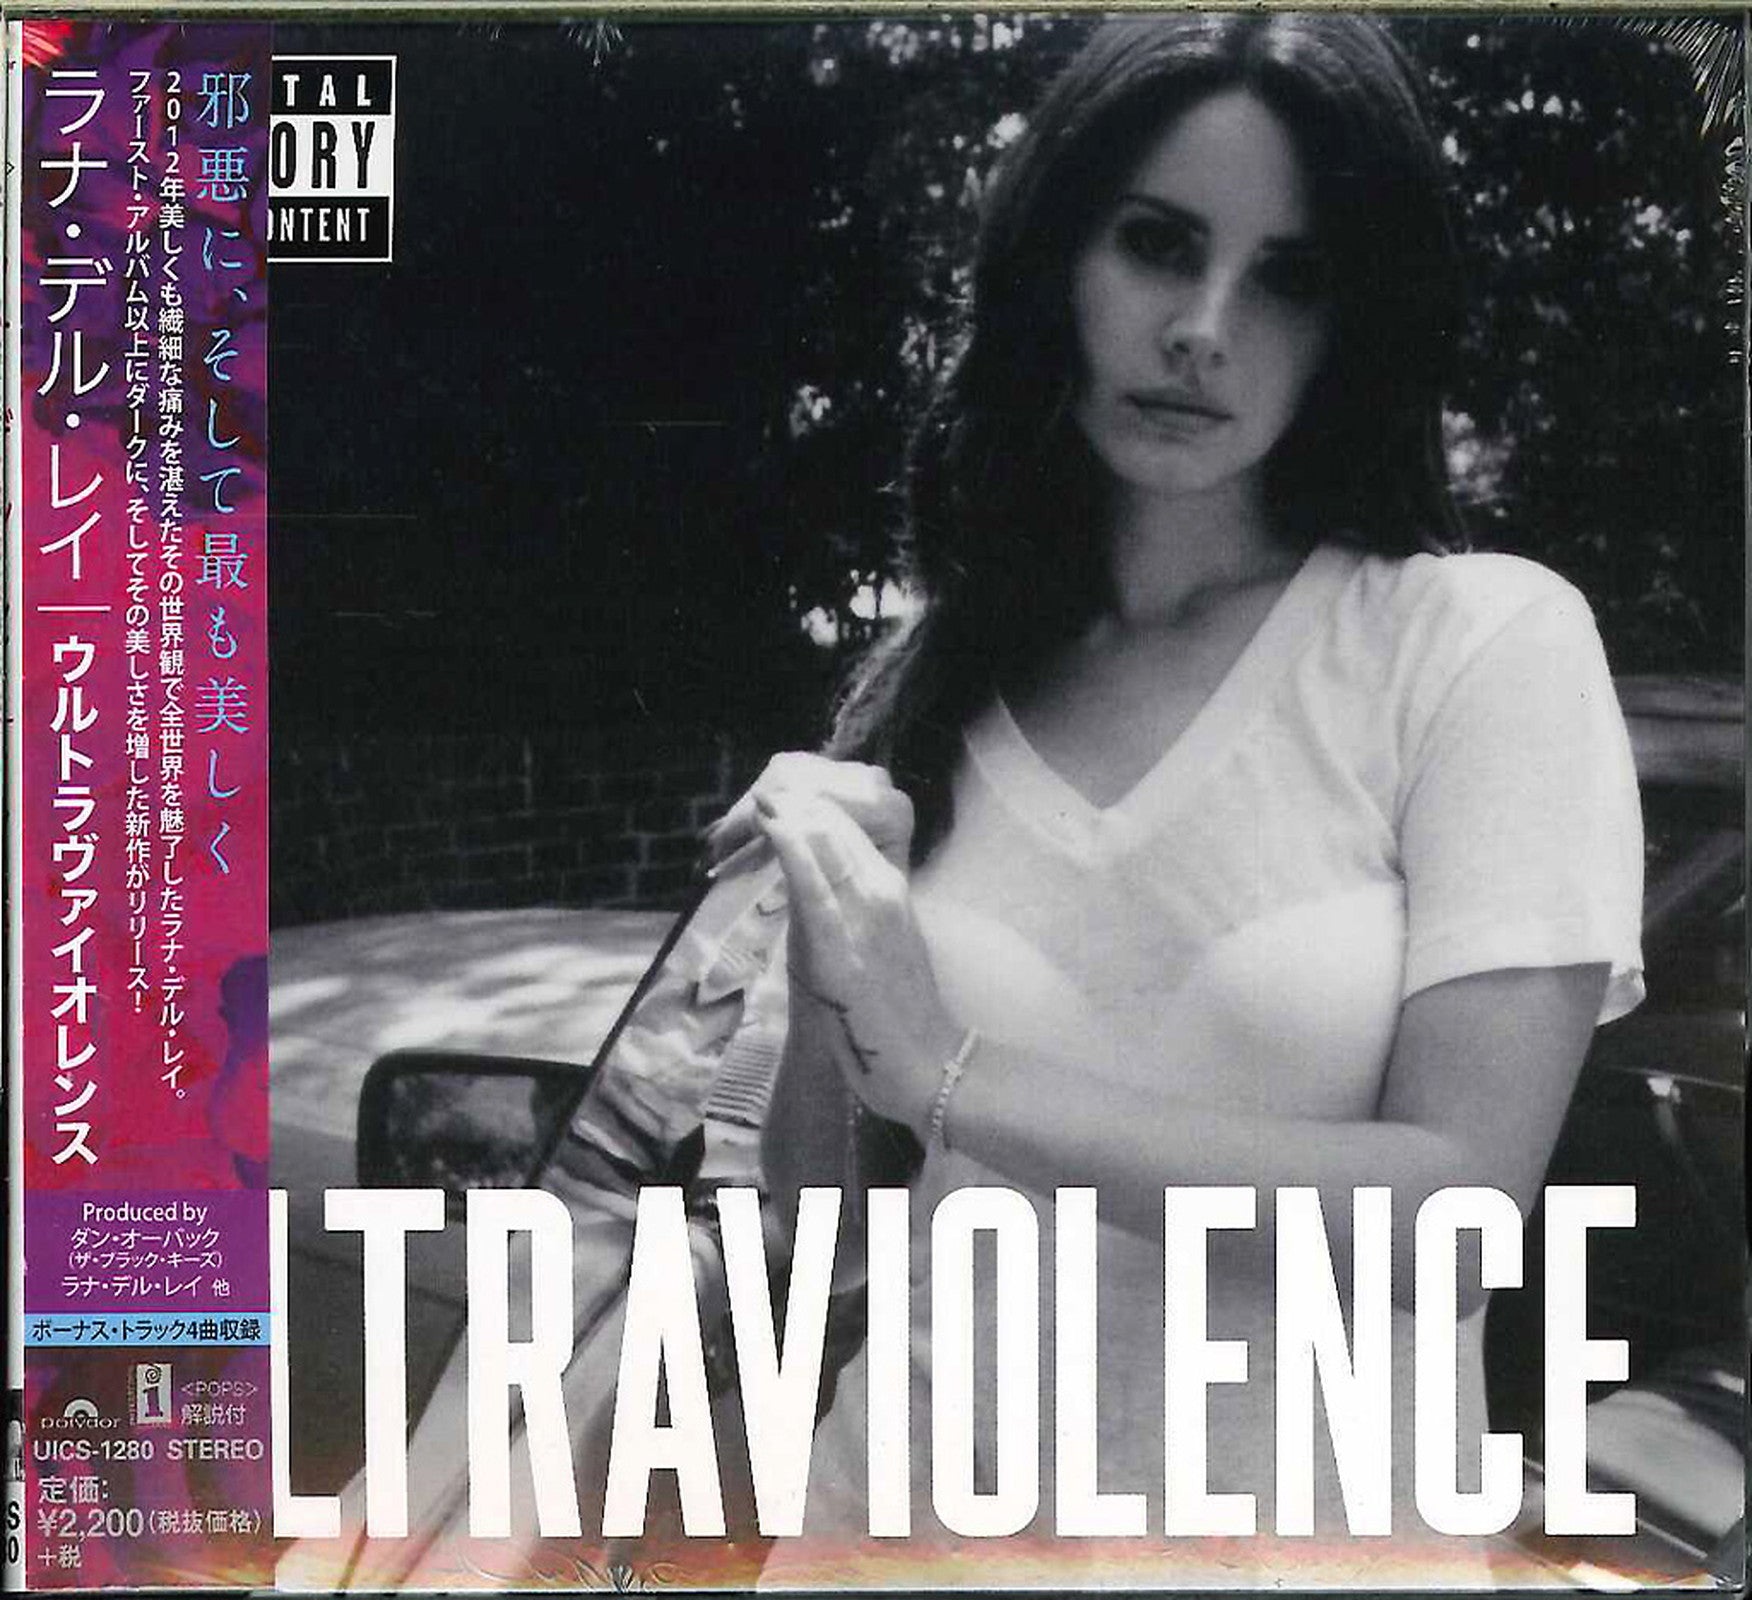 Ultraviolence by Lana Del Rey (CD, 2014) for sale online